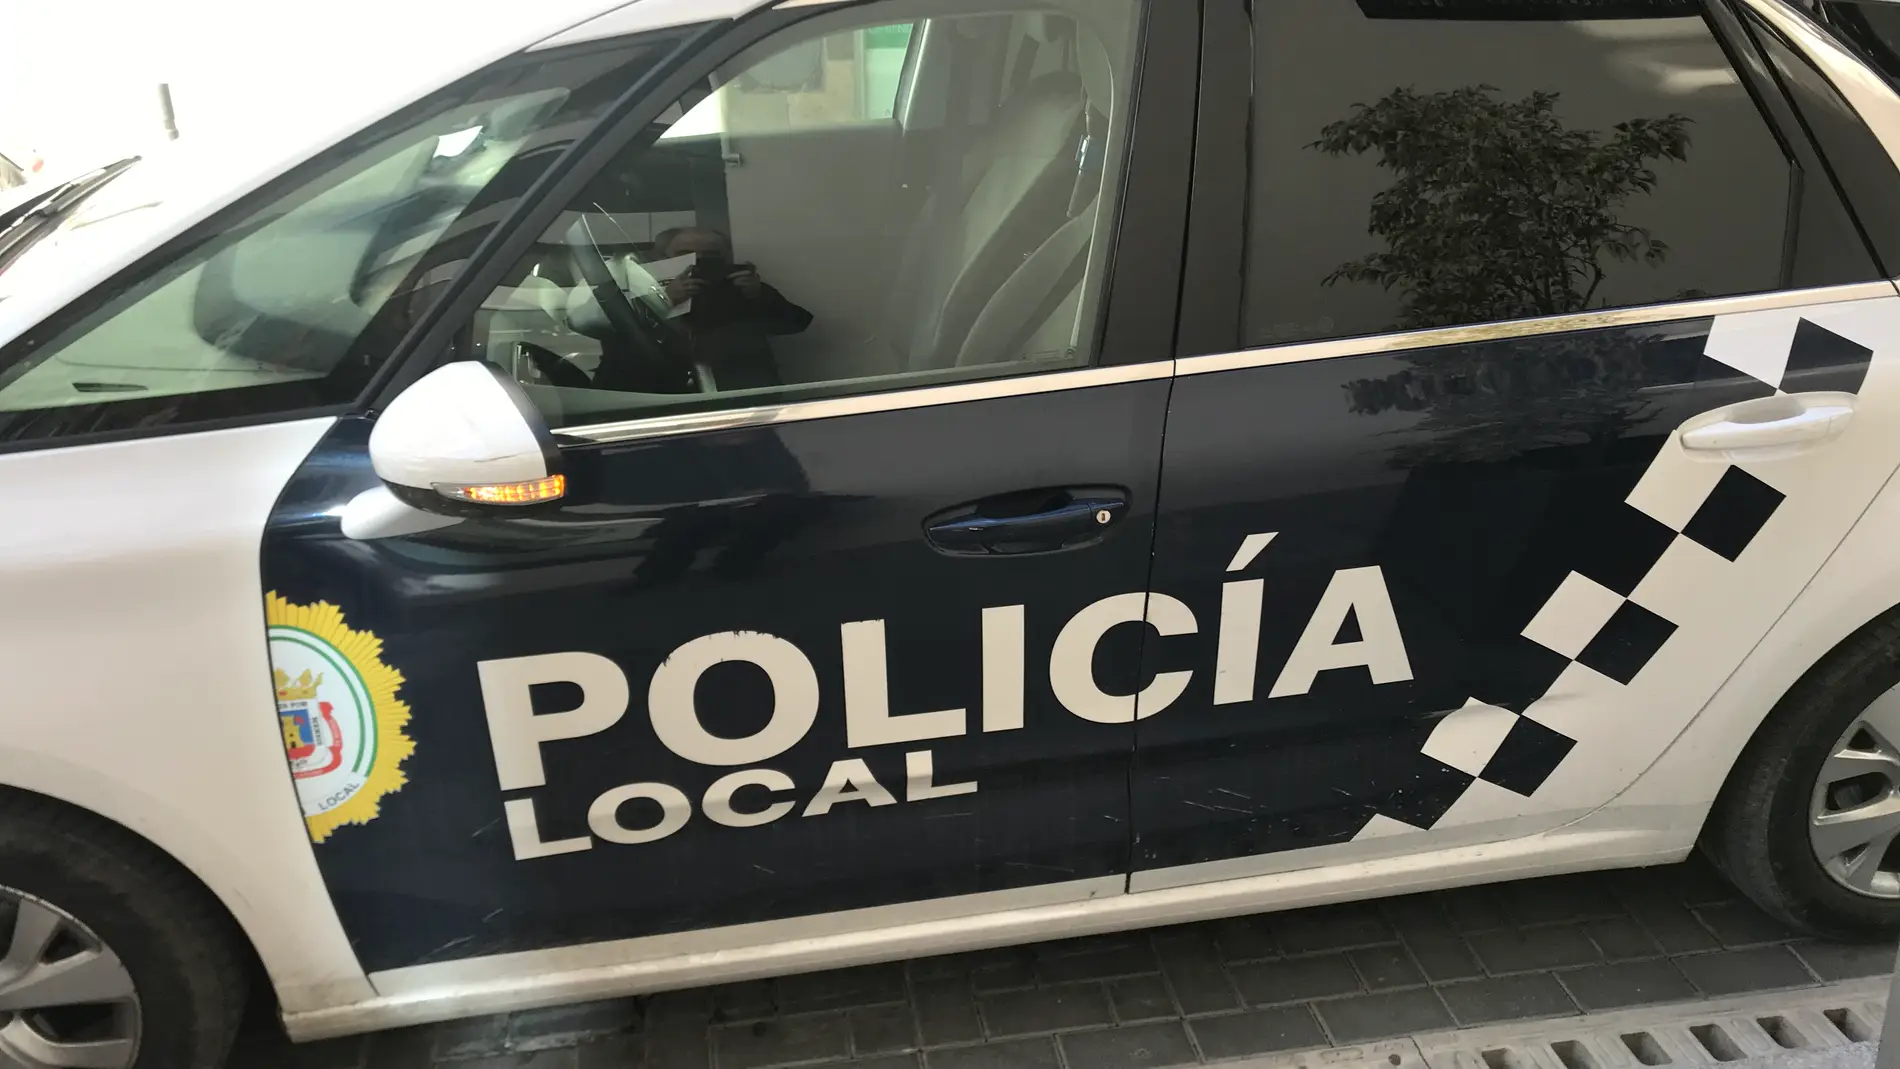 POLICIA LOCAL MOTRIL